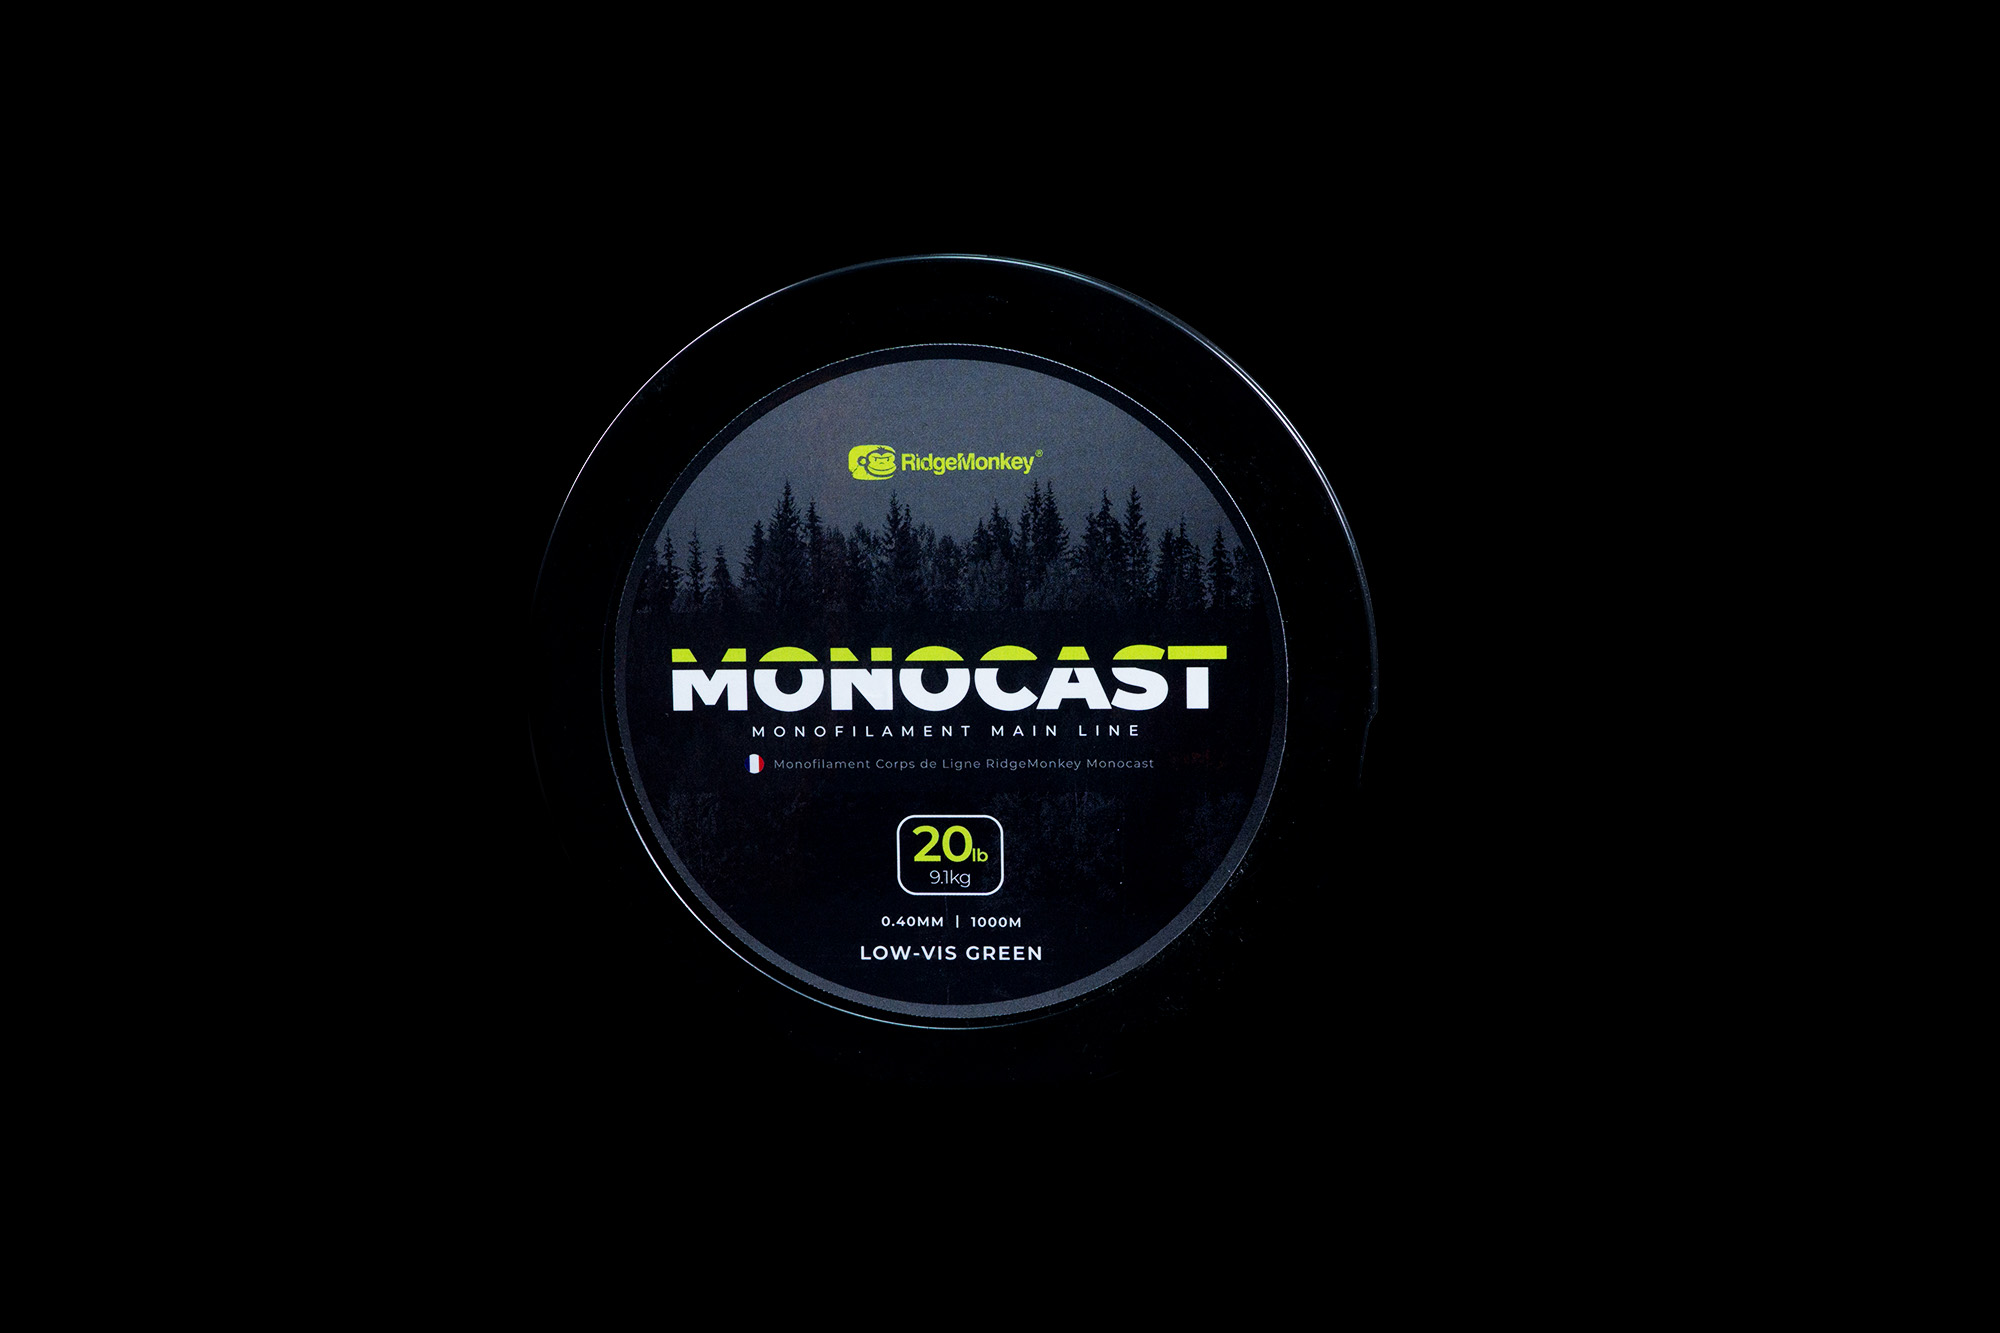 MonoCast Monofilament Main Line - RidgeMonkey®